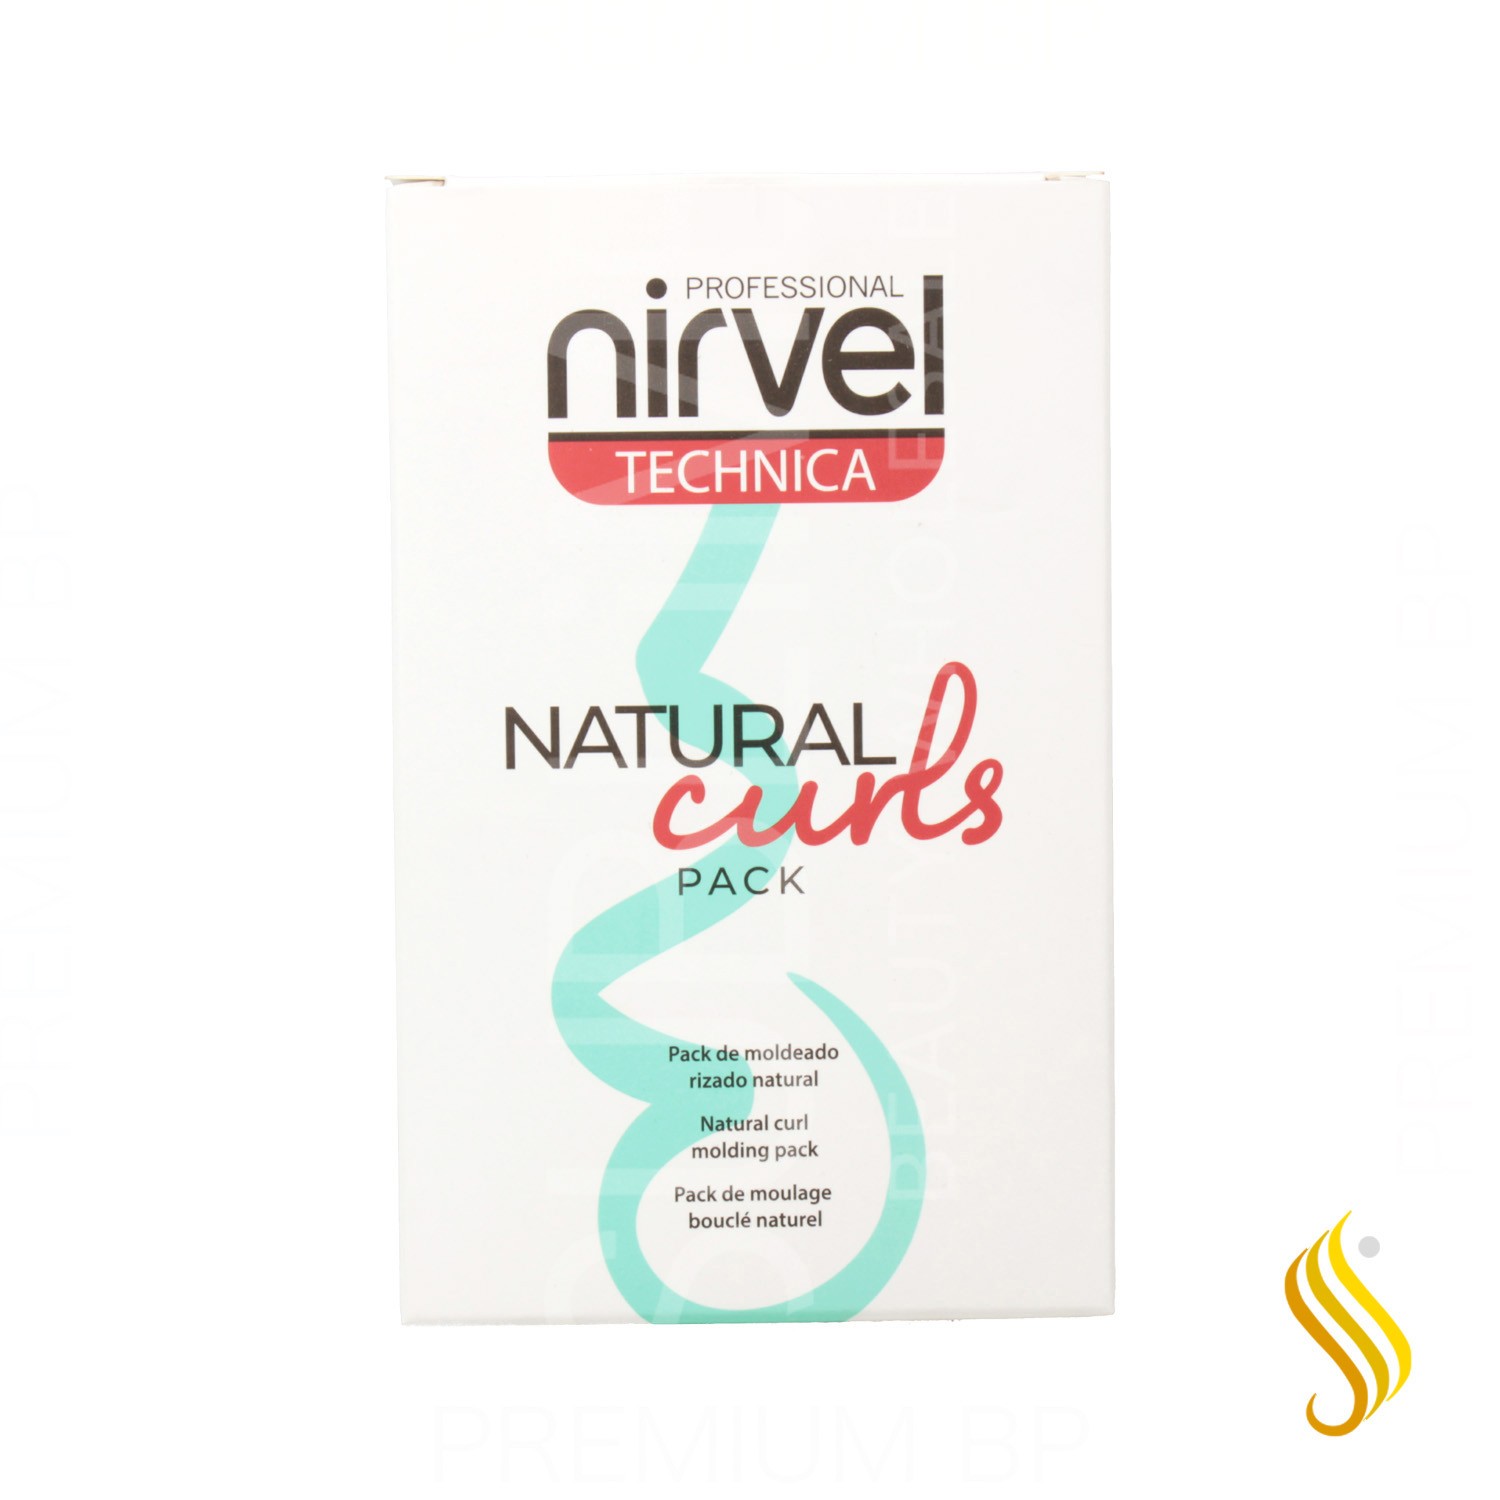 Nirvel Natural Curls Pack Nuevo 125 ml